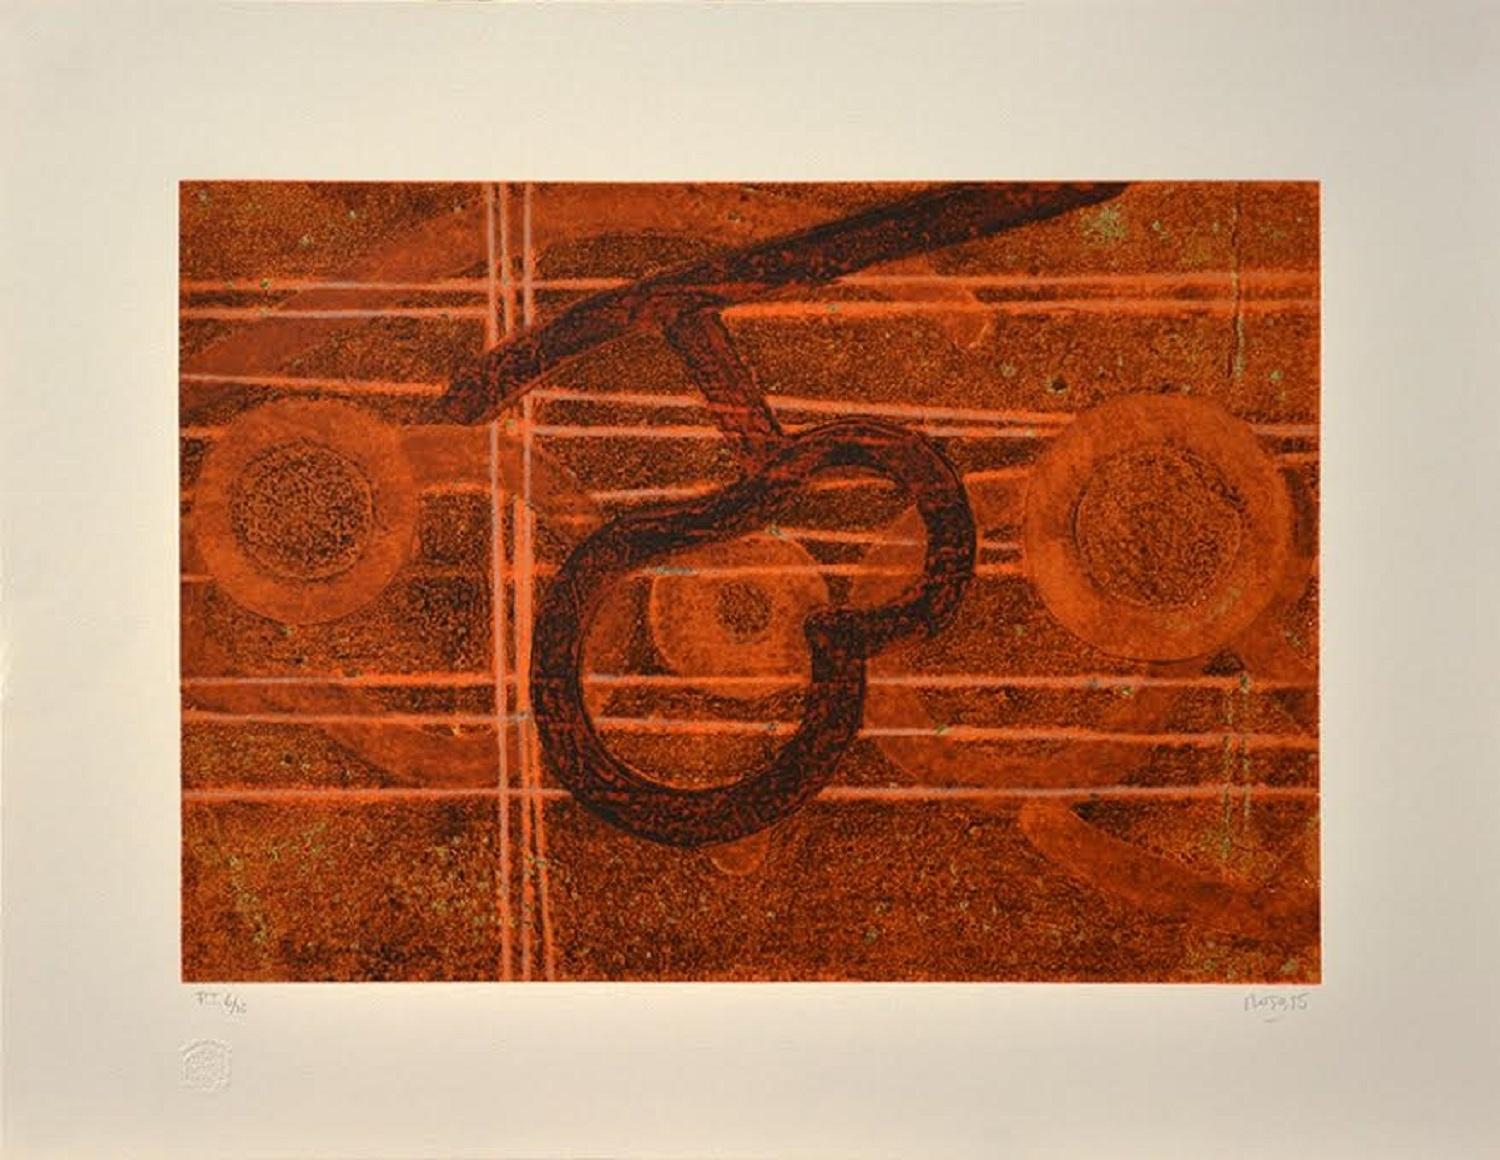 Vicente Rojo (Mexico, 1932-2021)
'Aforismo F', 2015
silkscreen on paper Deponte 300 g.
20.3 x 26.4 in. (51.5 x 67 cm.)
Edition of 140
ID: ROJ-147
Unframed
